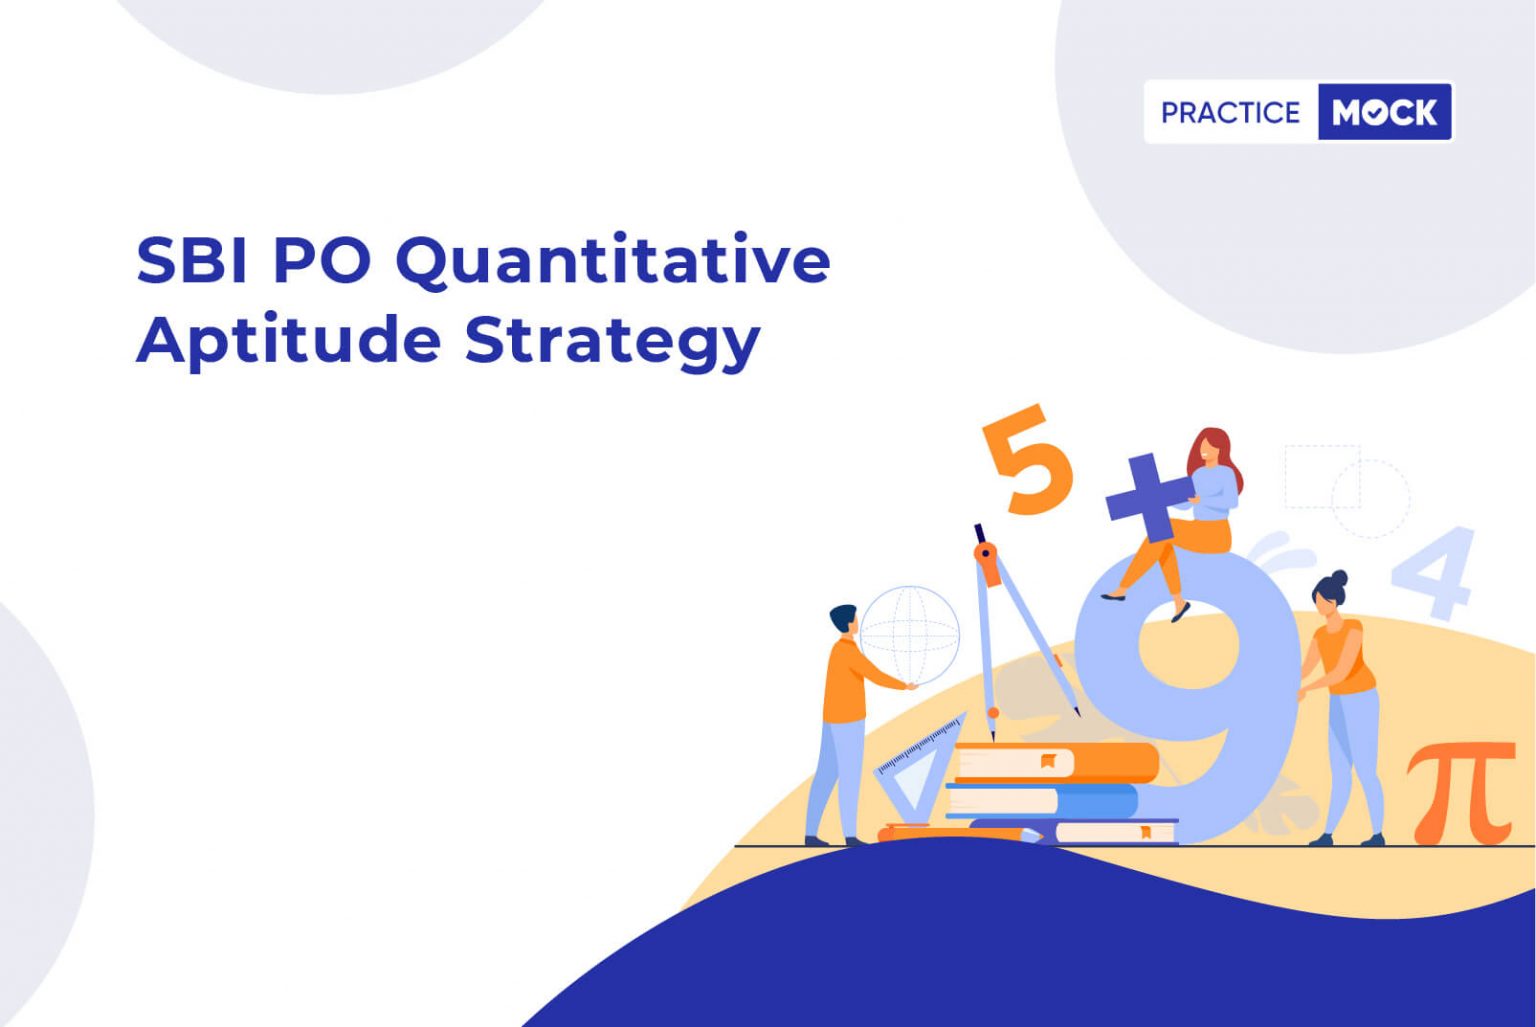 SBI PO Quantitative Aptitude Strategy PracticeMock